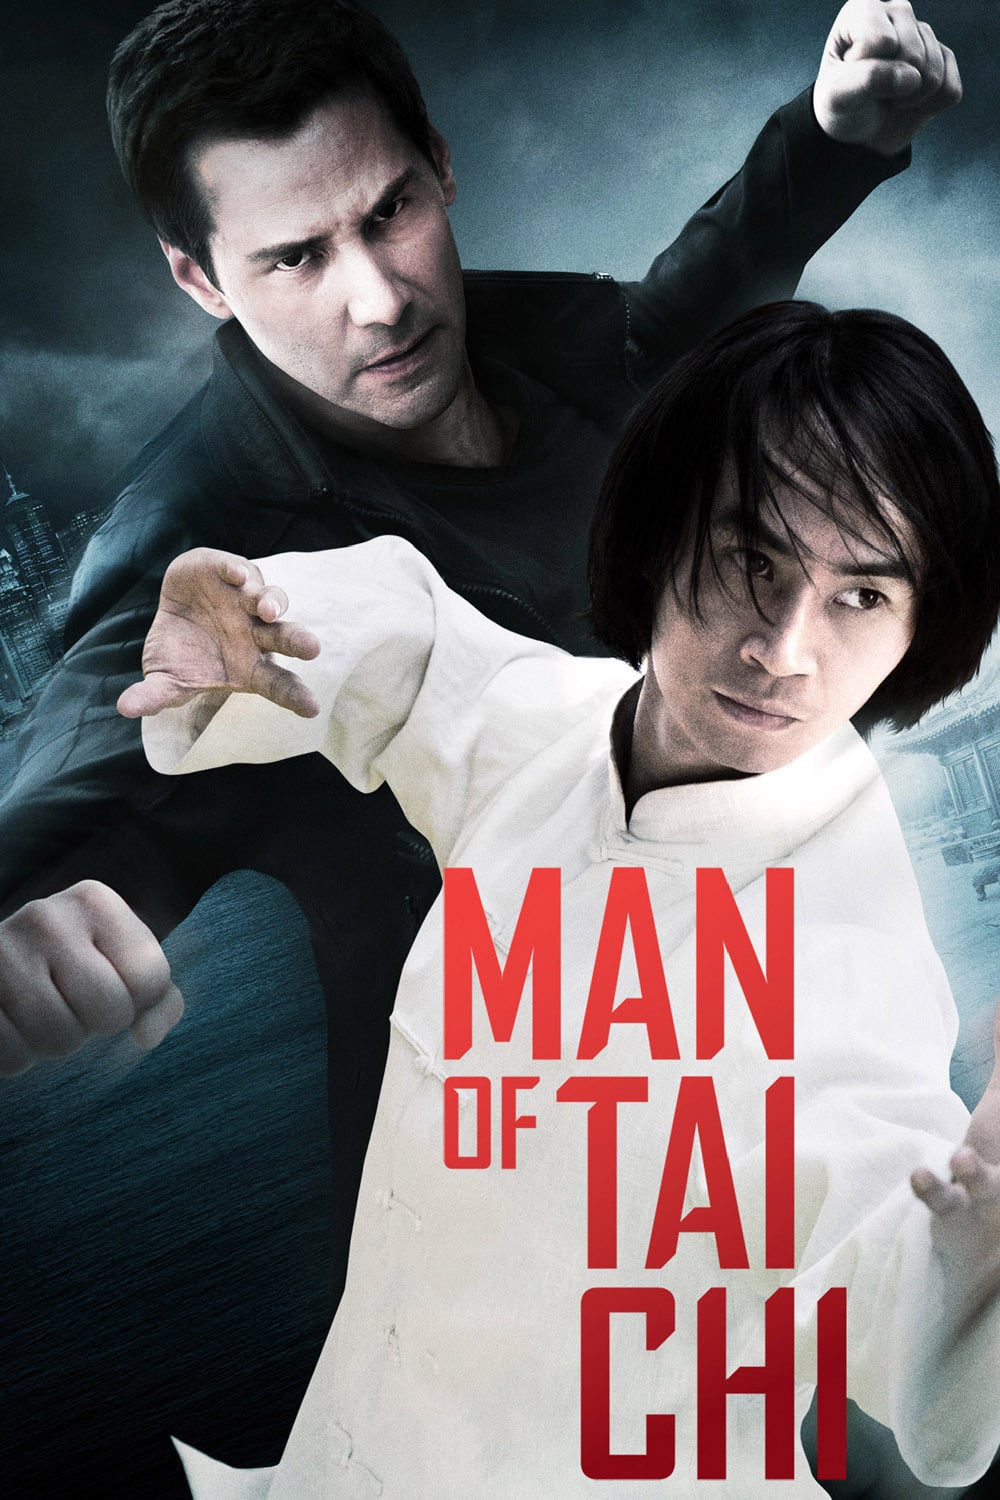 Plakat von "Man of Tai Chi"